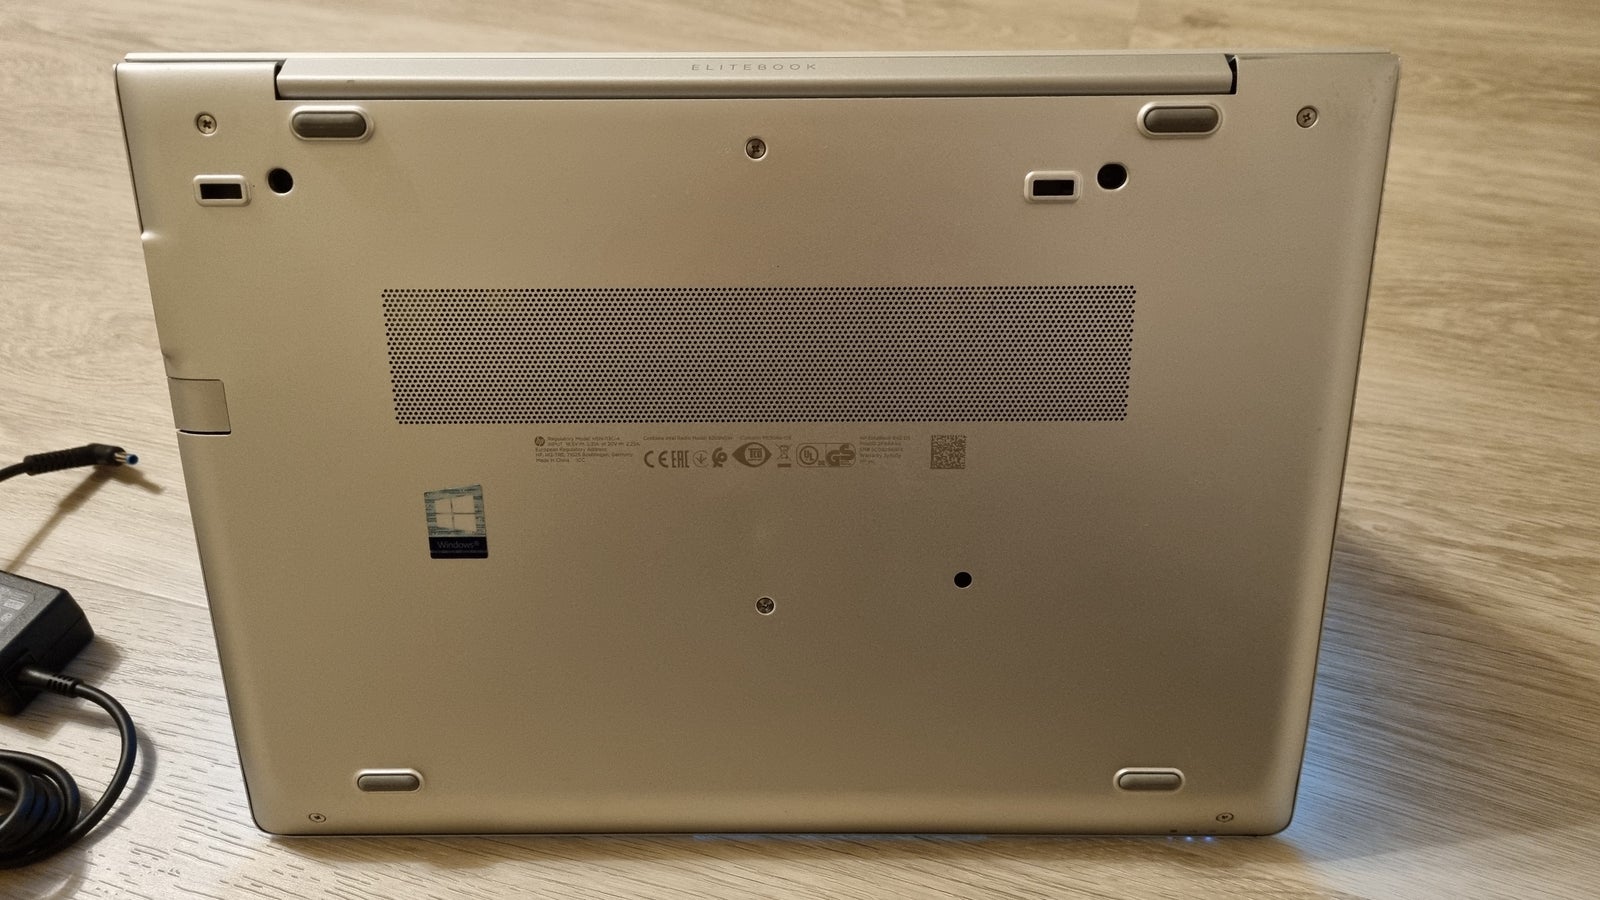 HP EliteBook 840 G5, 3,4 GHz, 8 GB ram